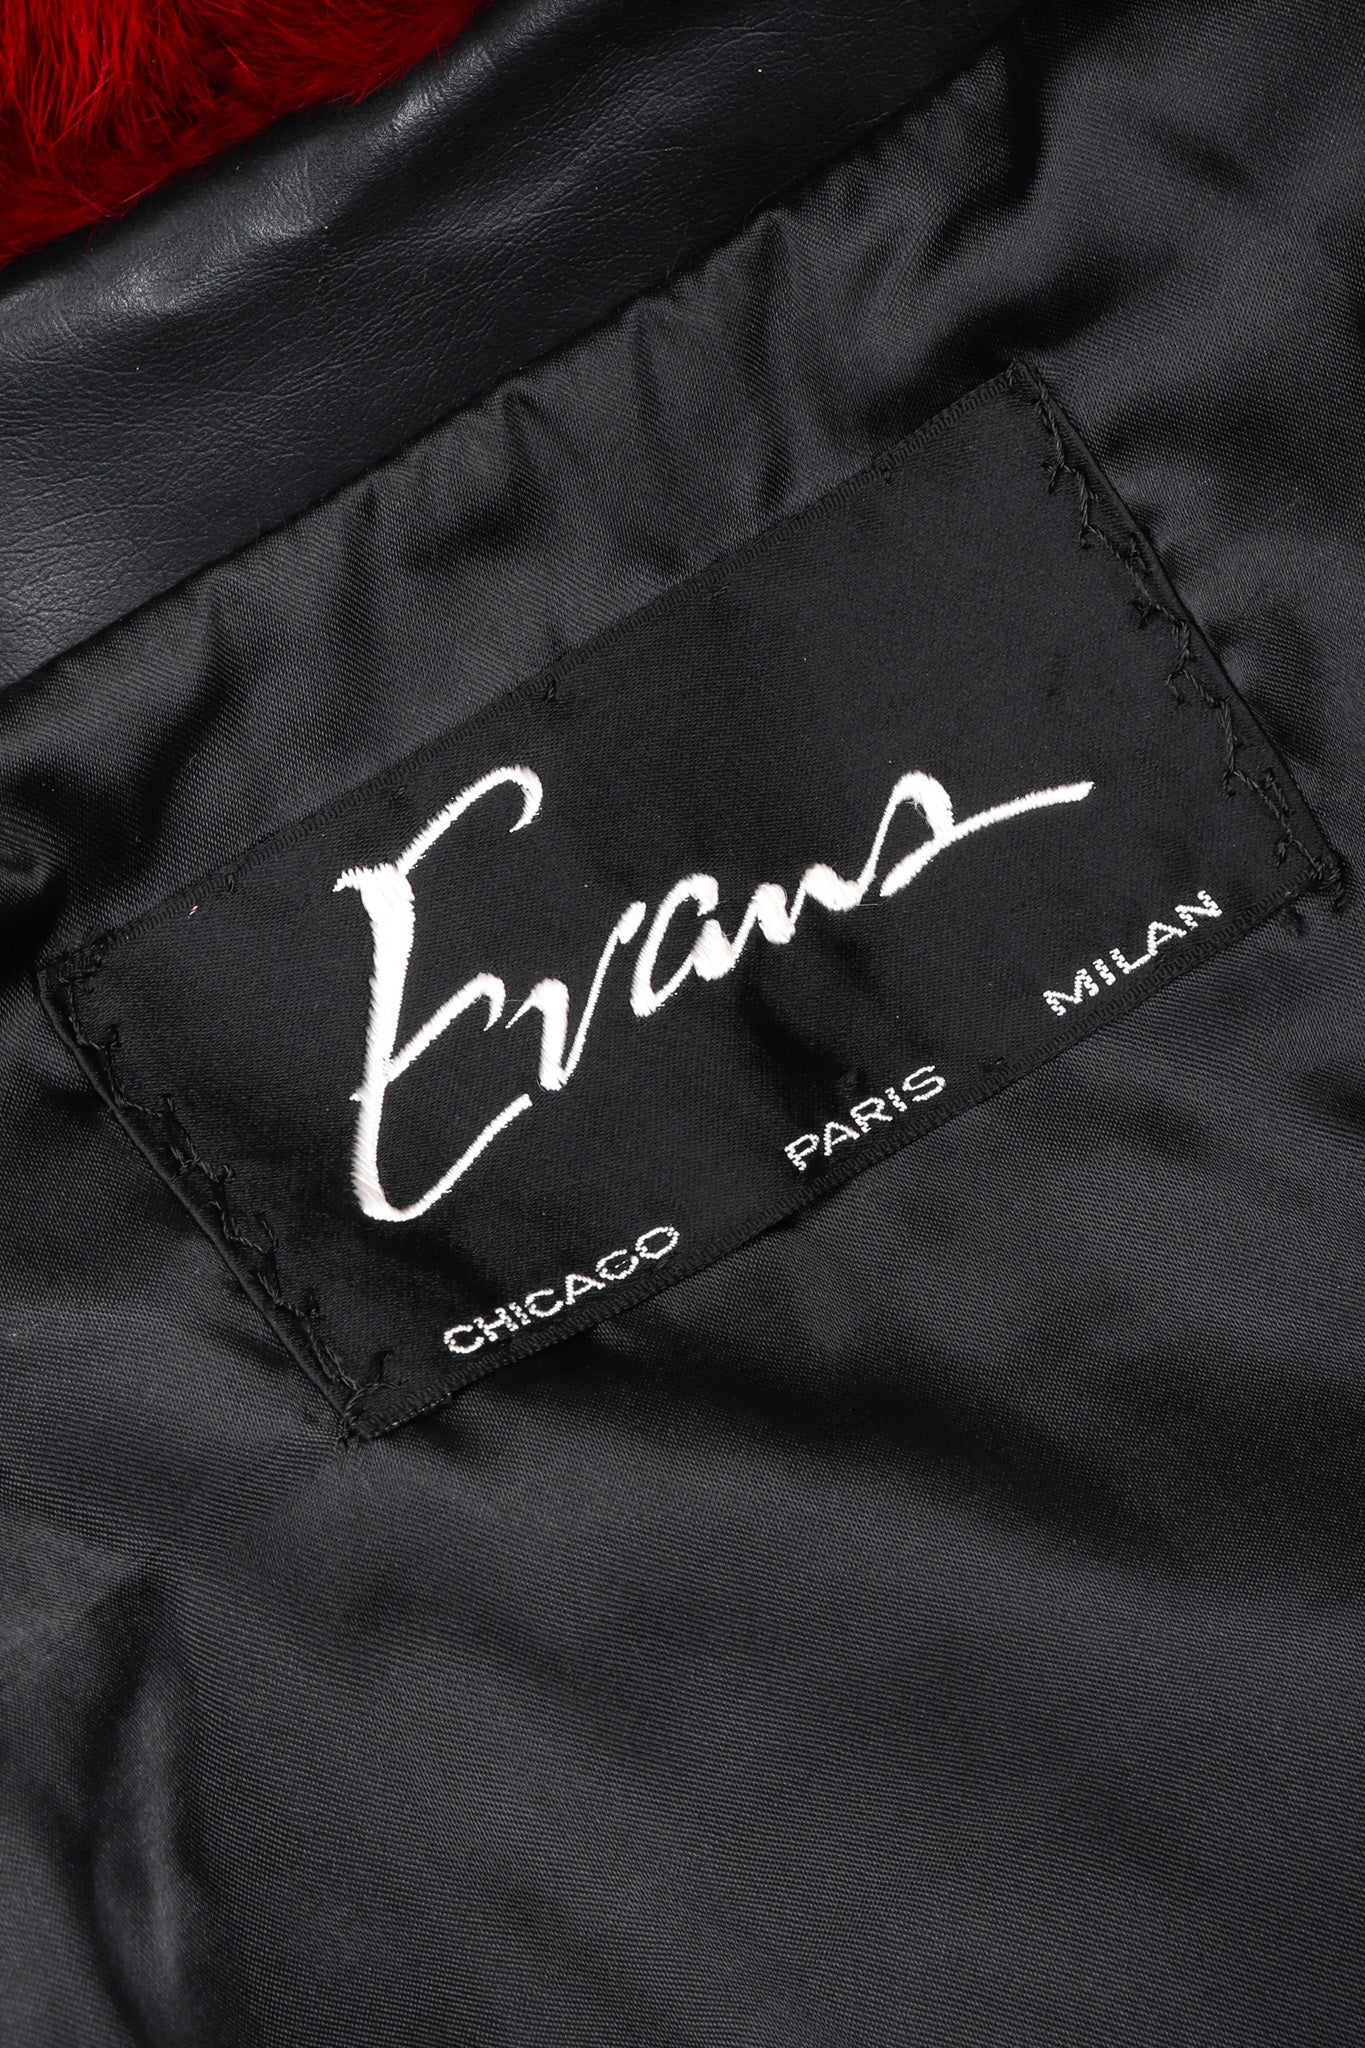 Recess Los Angeles Vintage Evans Oxblood Black Cherry Leather Trim Fur Coat